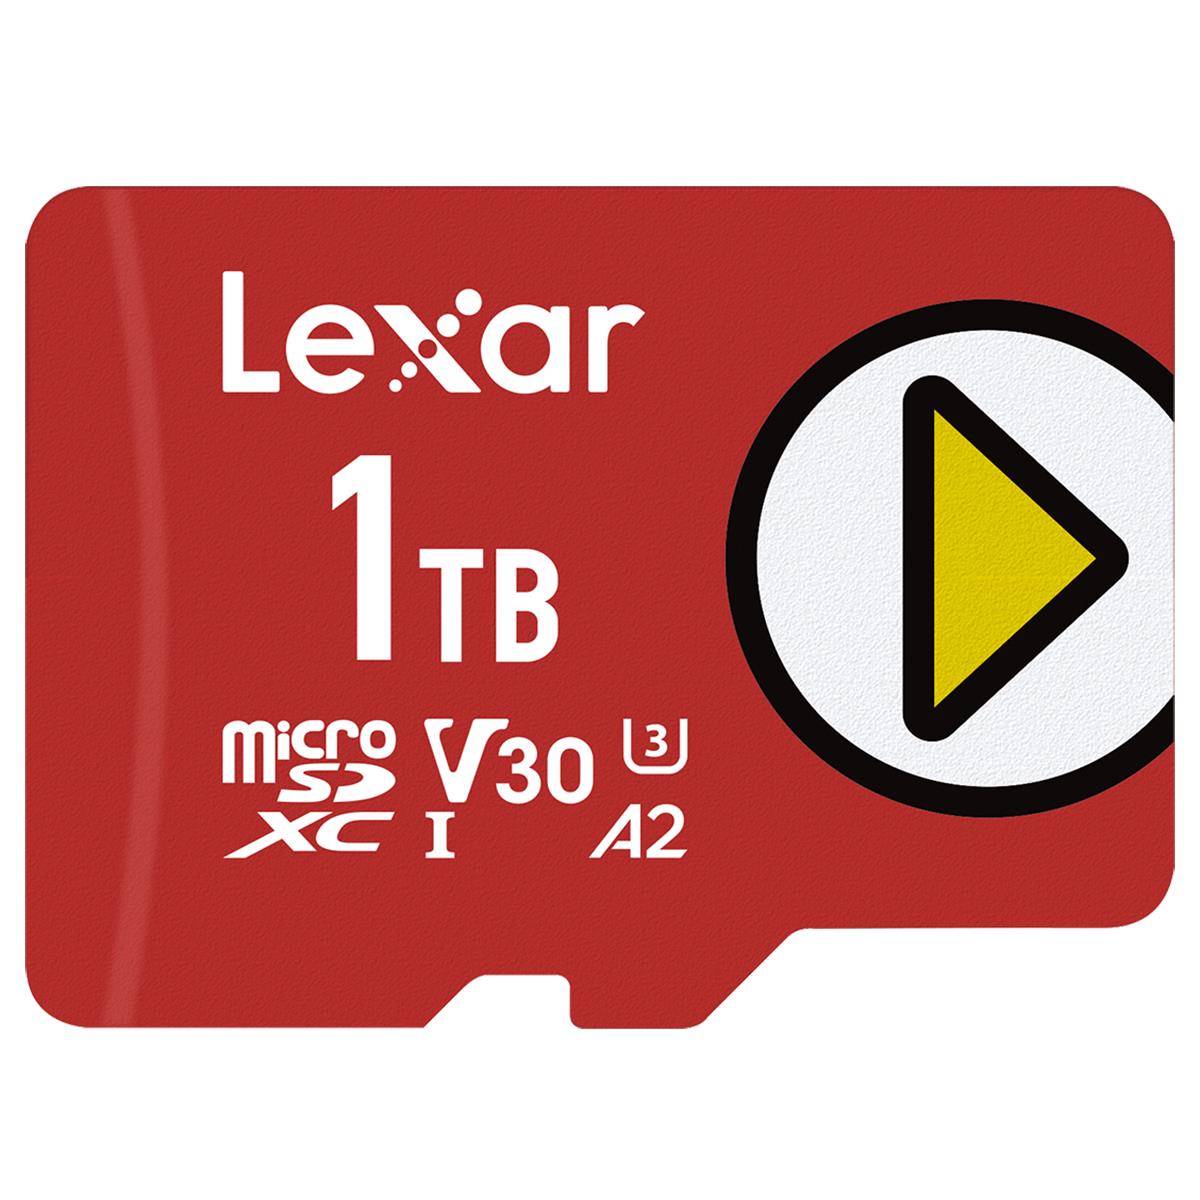 Lexar 1TB PLAY Class 10 UHS-I U3 MicroSDXC Memory Card, 150MB/s Read